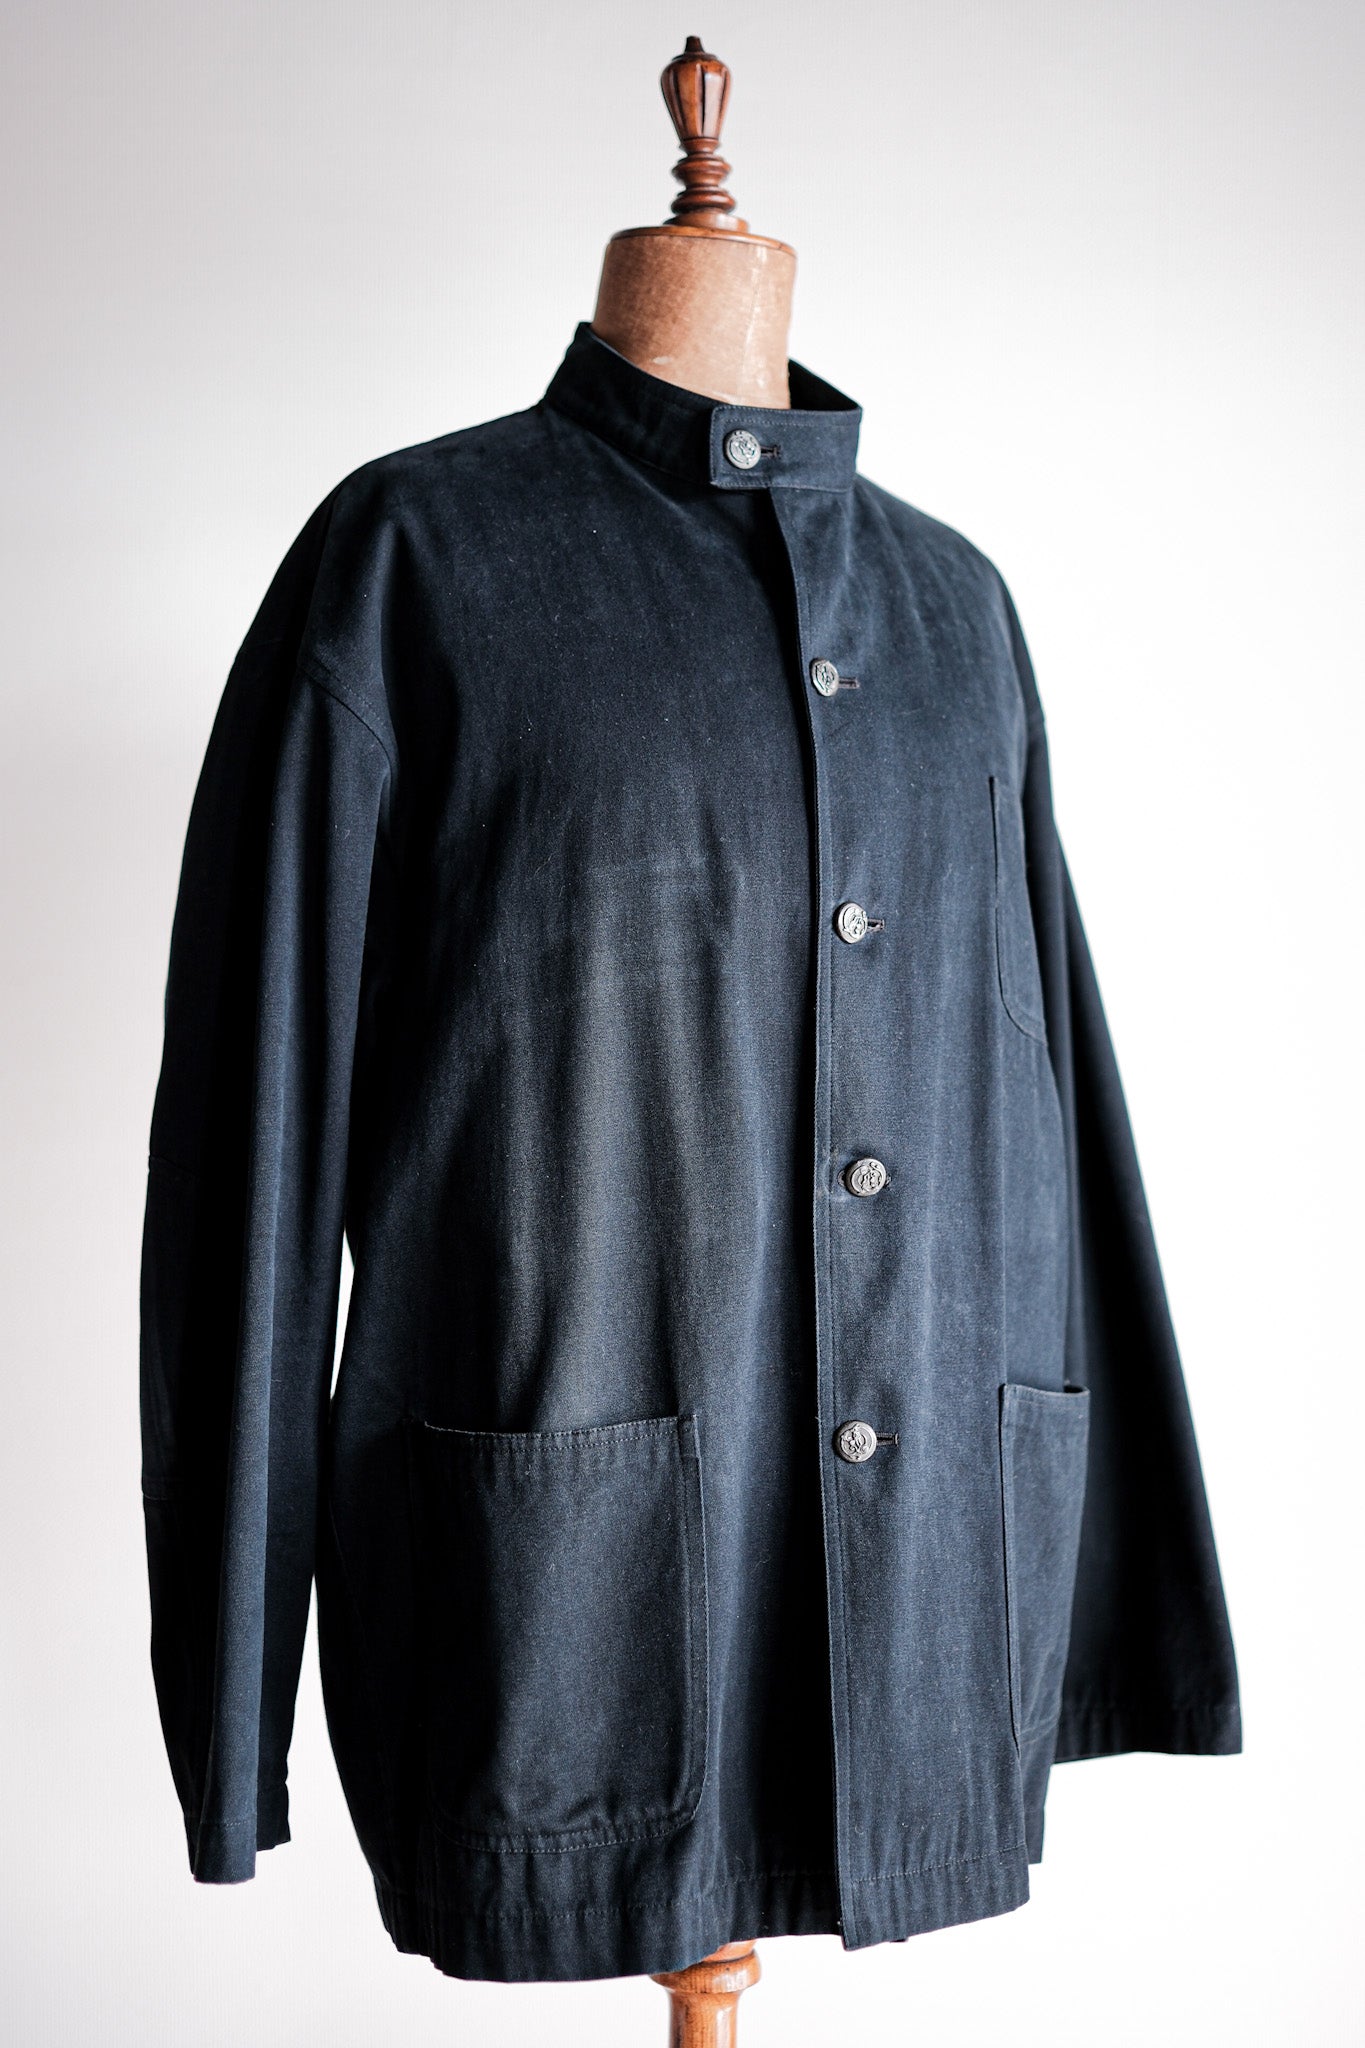 【~00's】ARNYS PARIS Forestiere Jacket Size.50